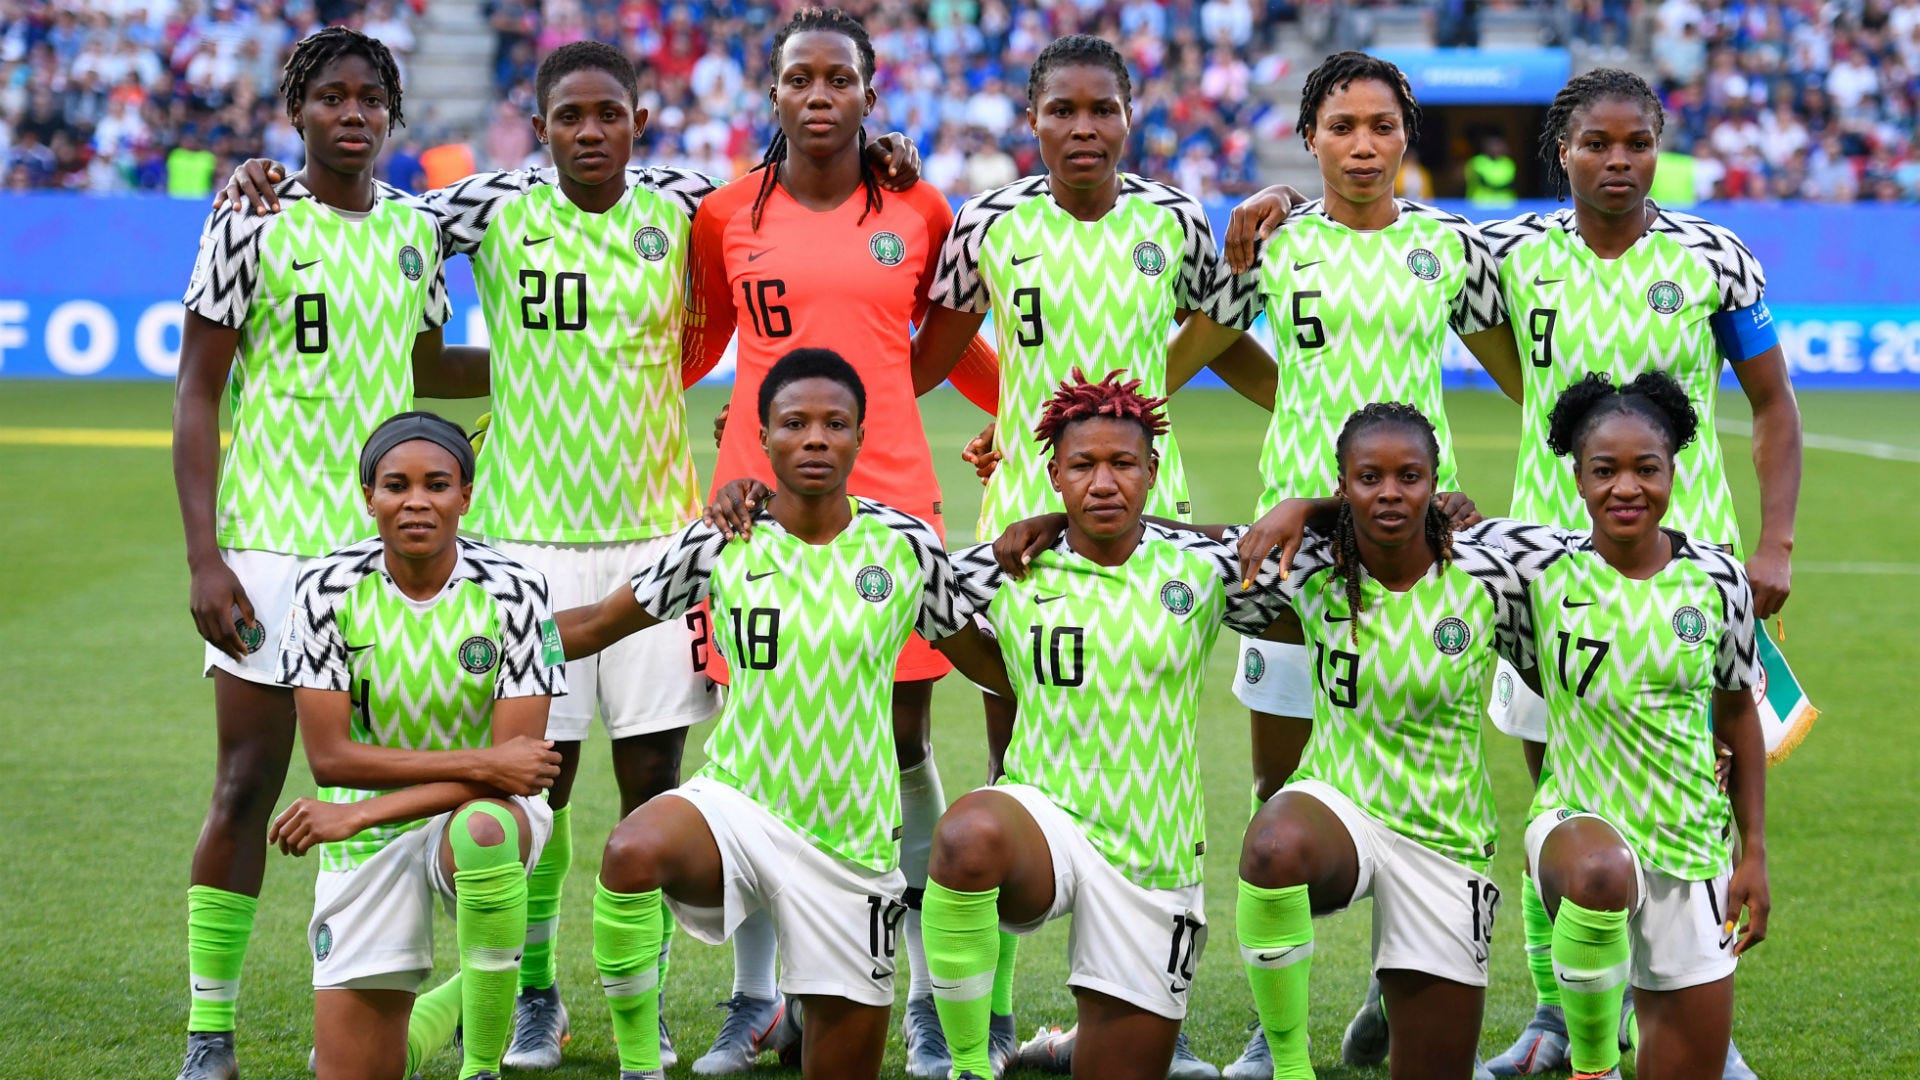 Nigeria beat England, Australia and Germany to win best Women's World